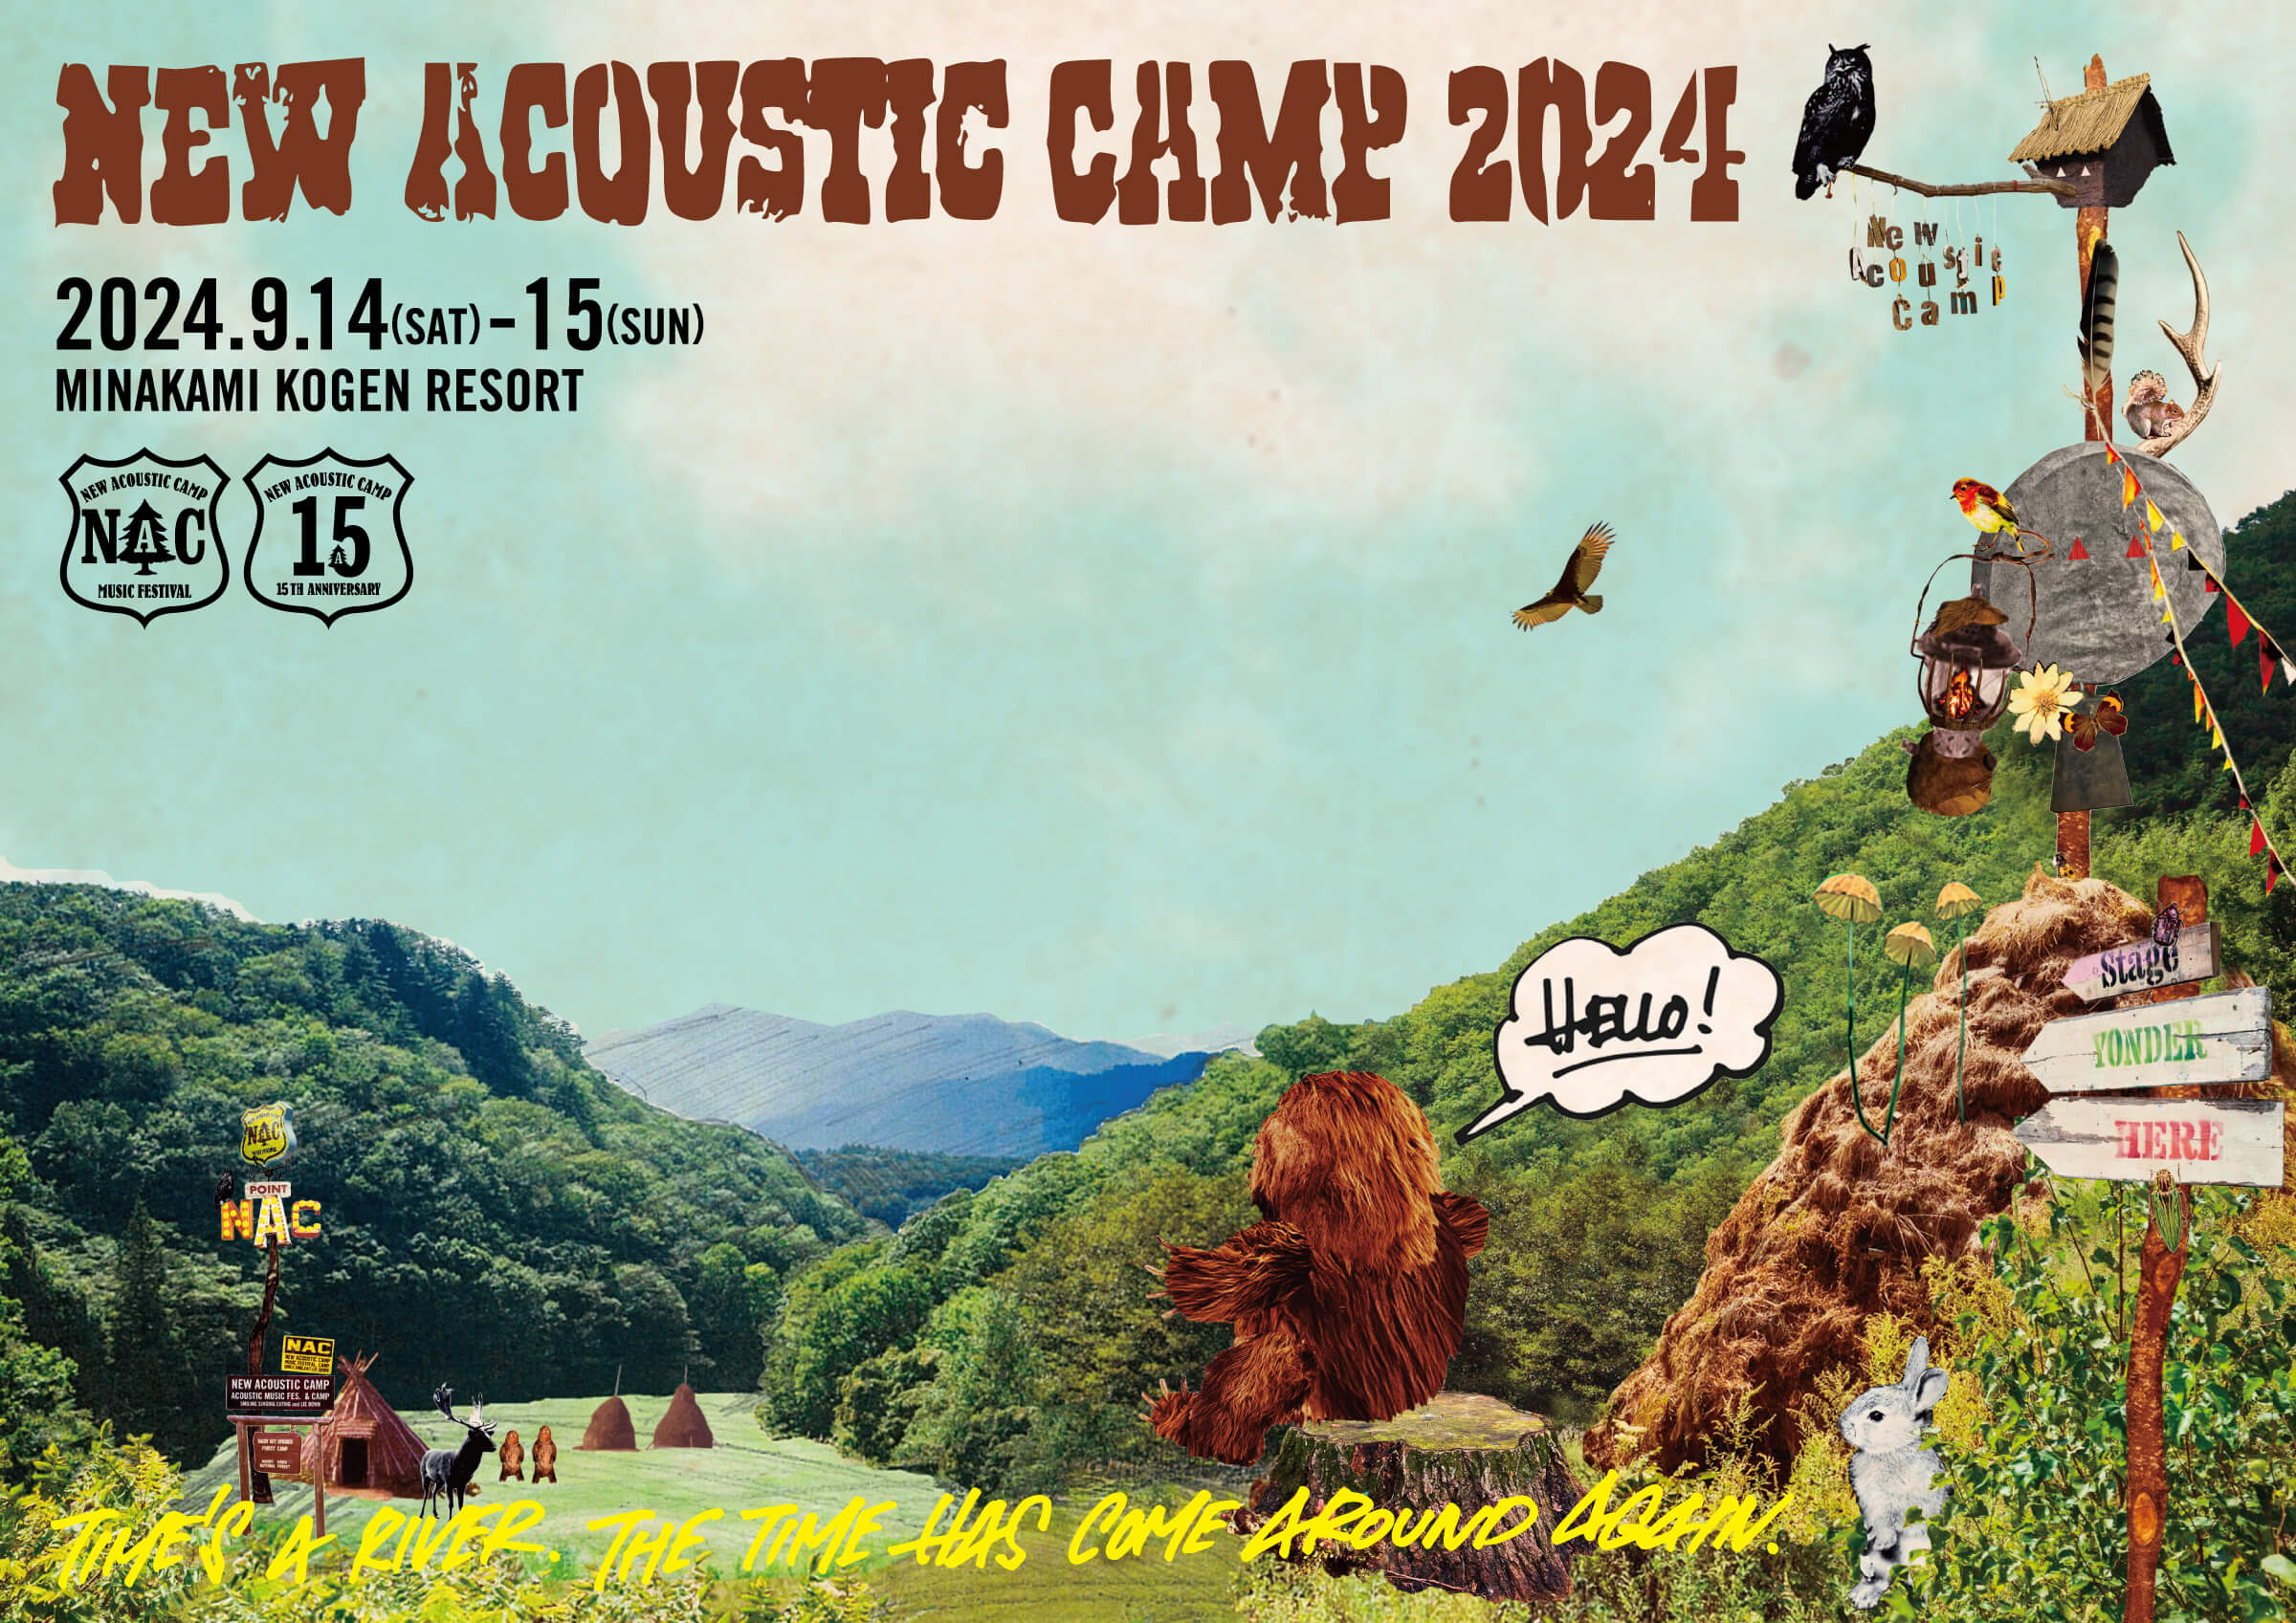 New Acoustic Camp 2024 | ニューアコ 2024 - 2024.9.14(SAT)-15(SUN)-16(MON) 水上高原リゾート200